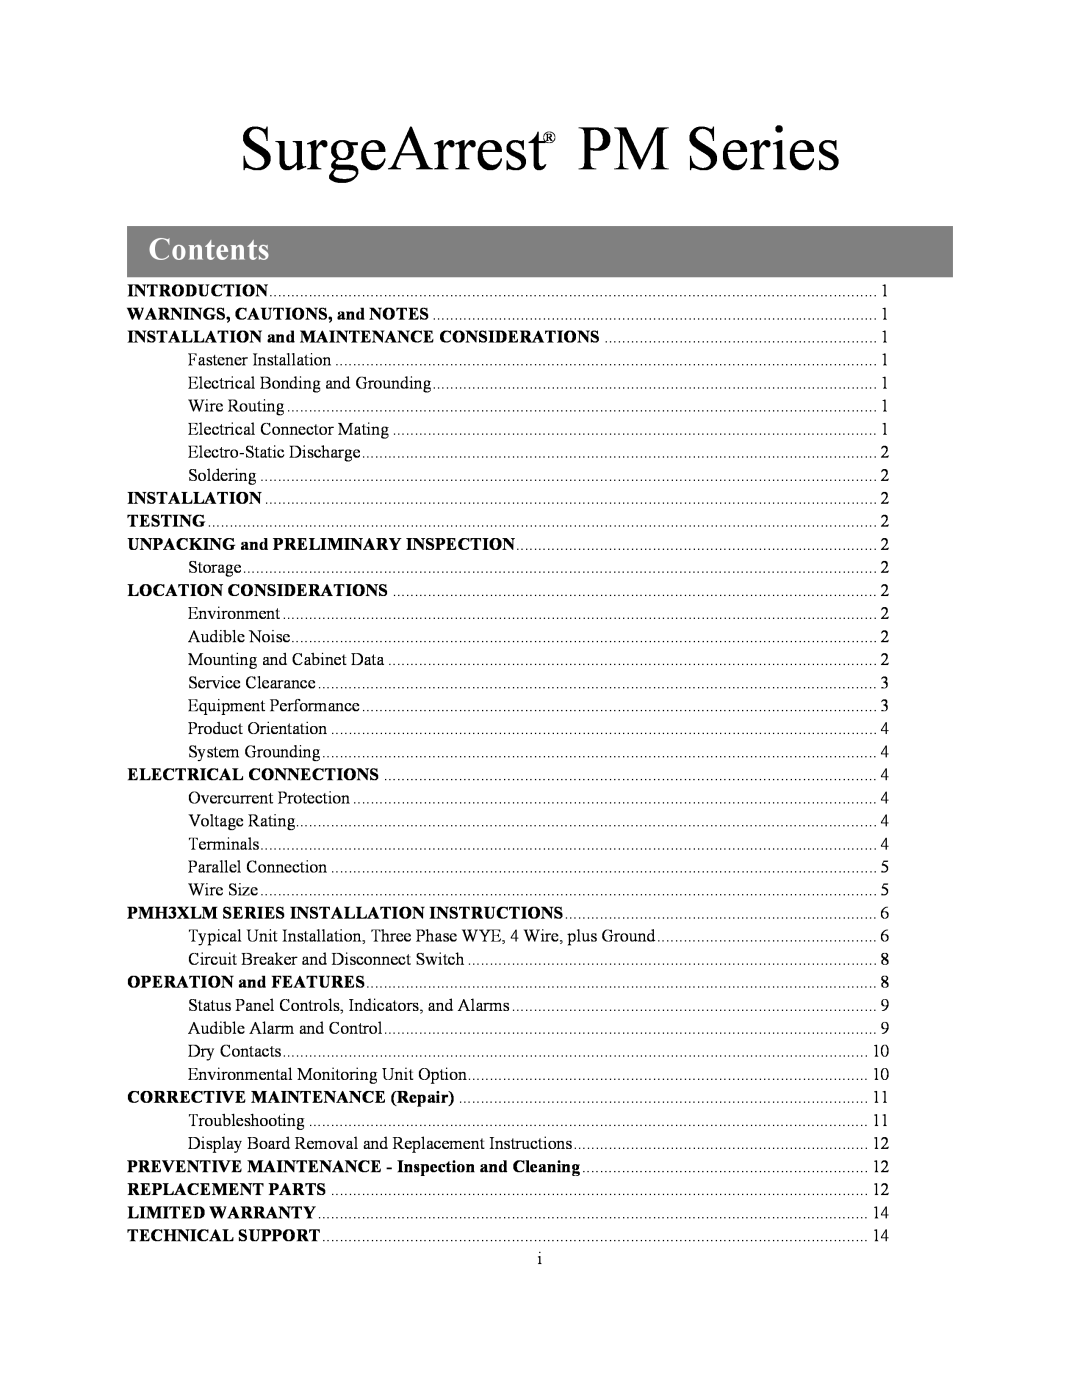 American Power Conversion PMH3XLM user manual SurgeArrest PM Series, Contents 